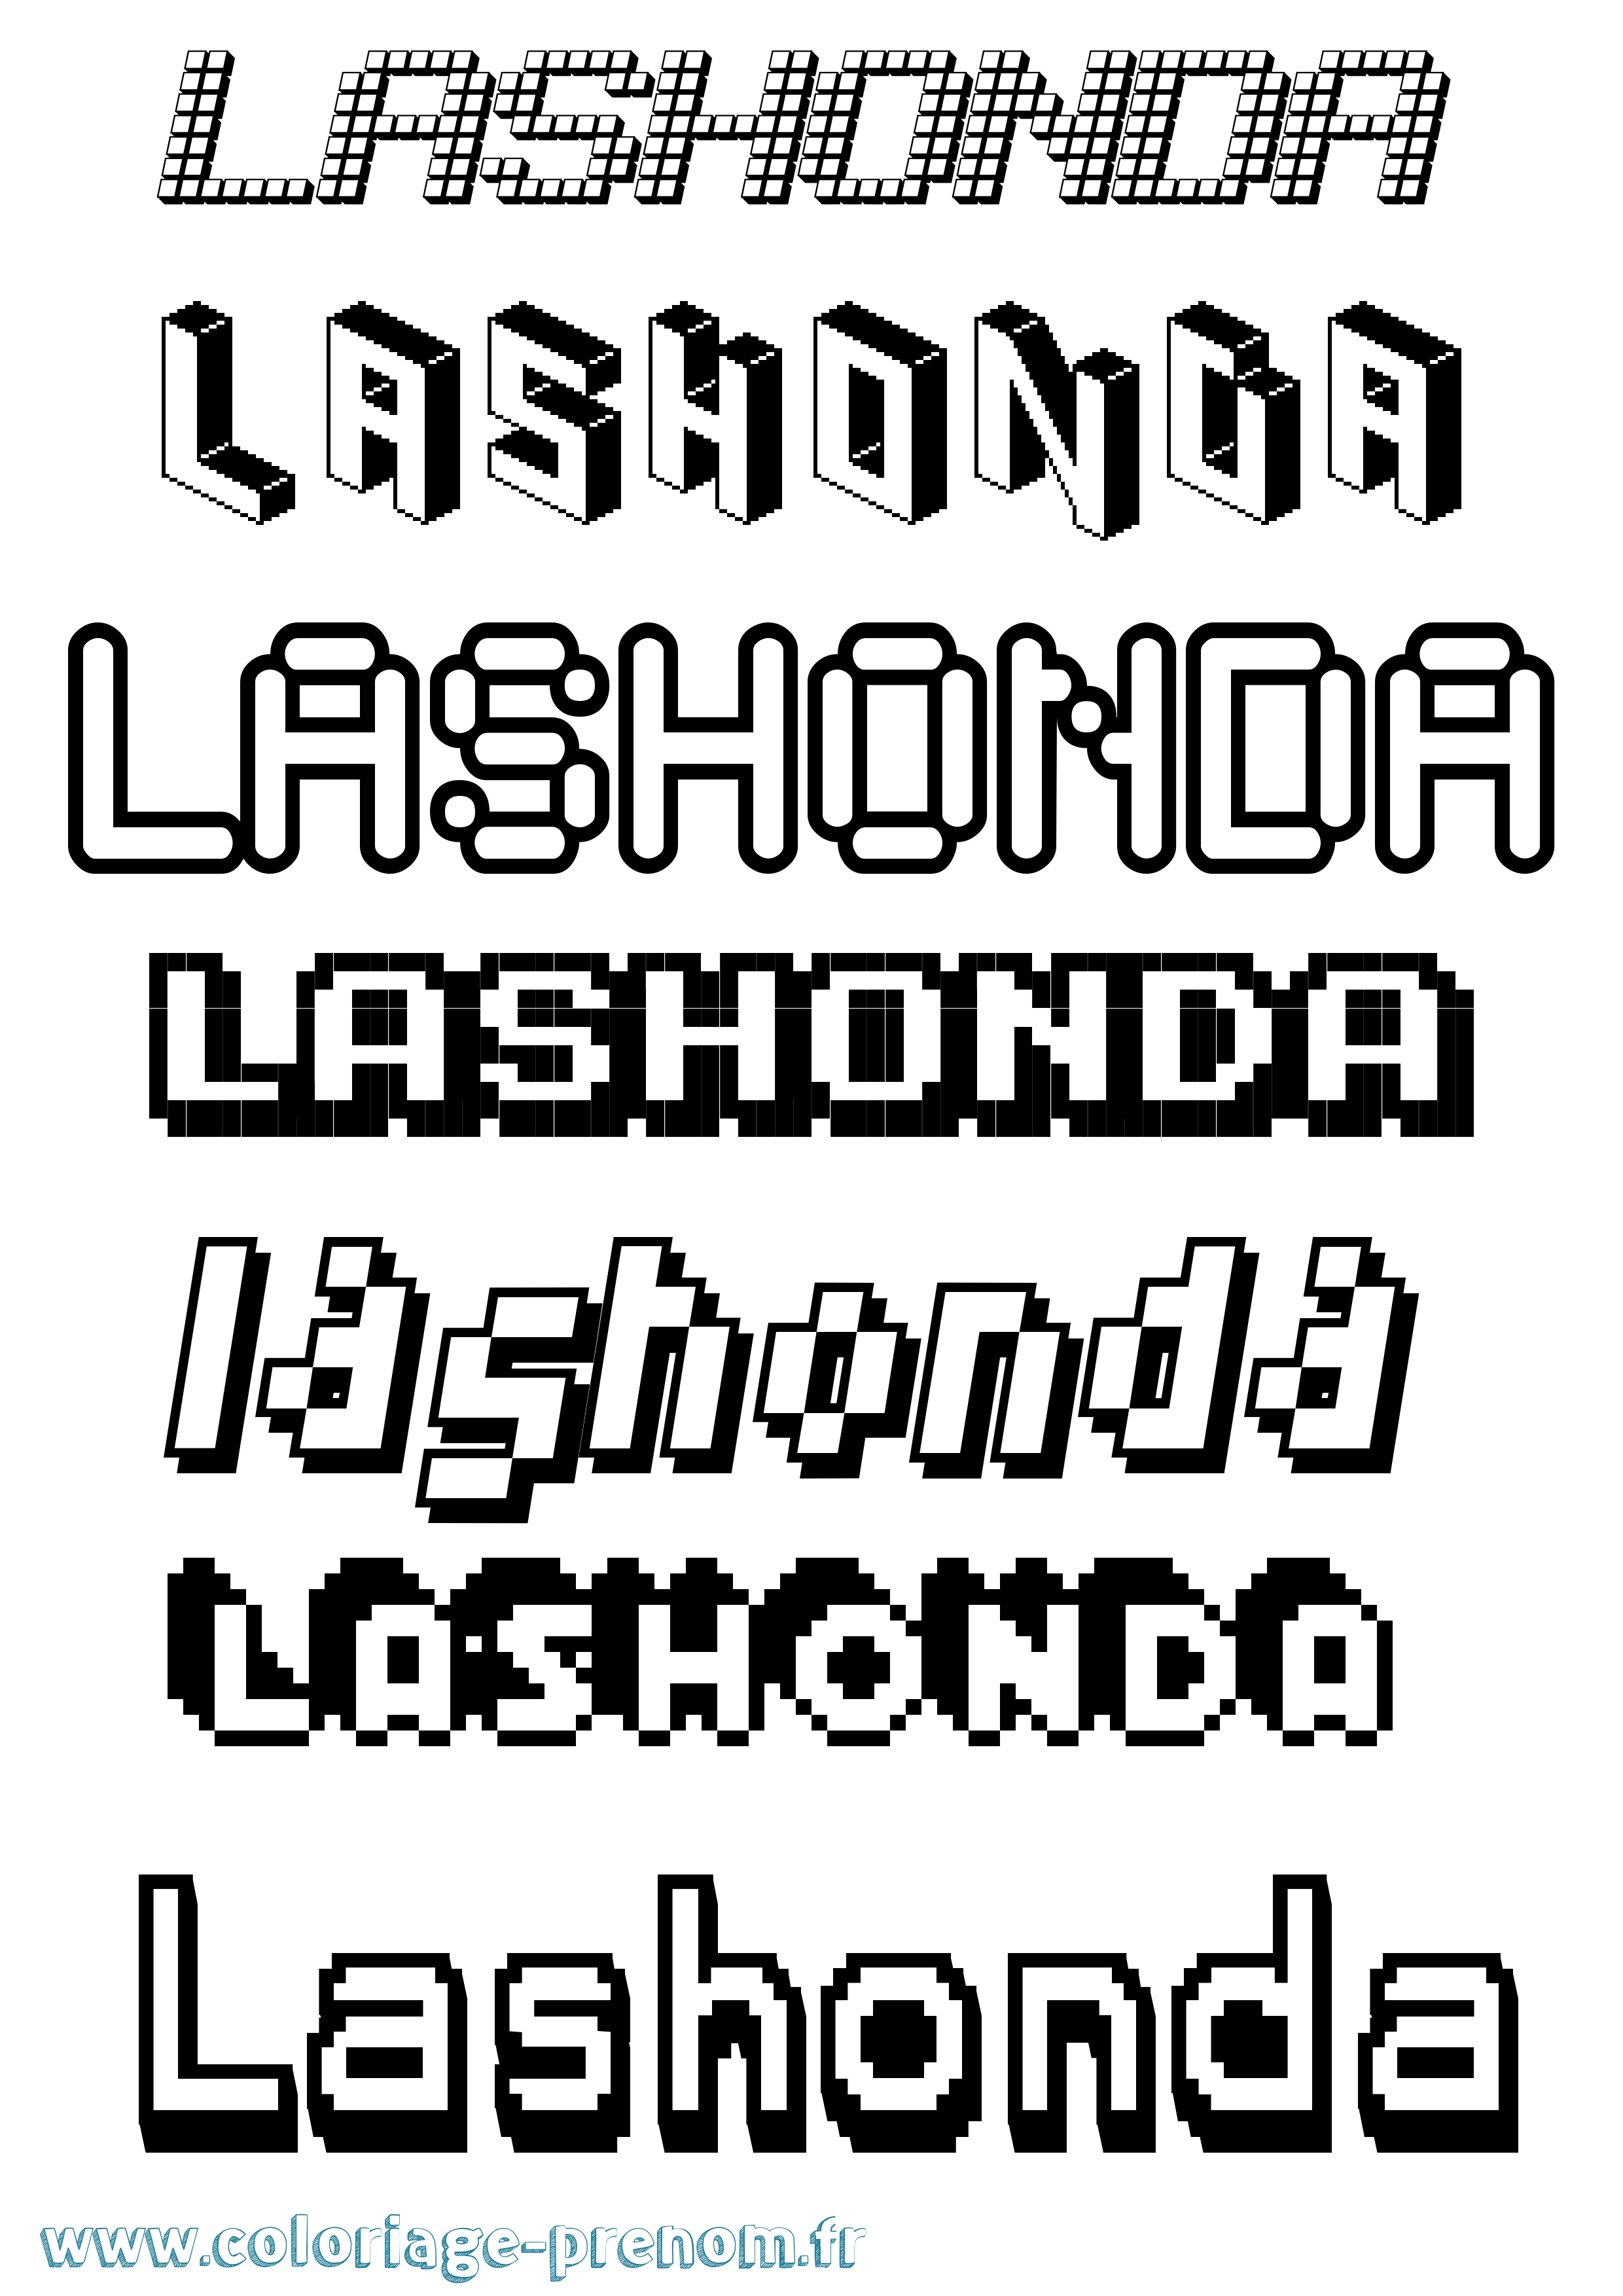 Coloriage prénom Lashonda Pixel